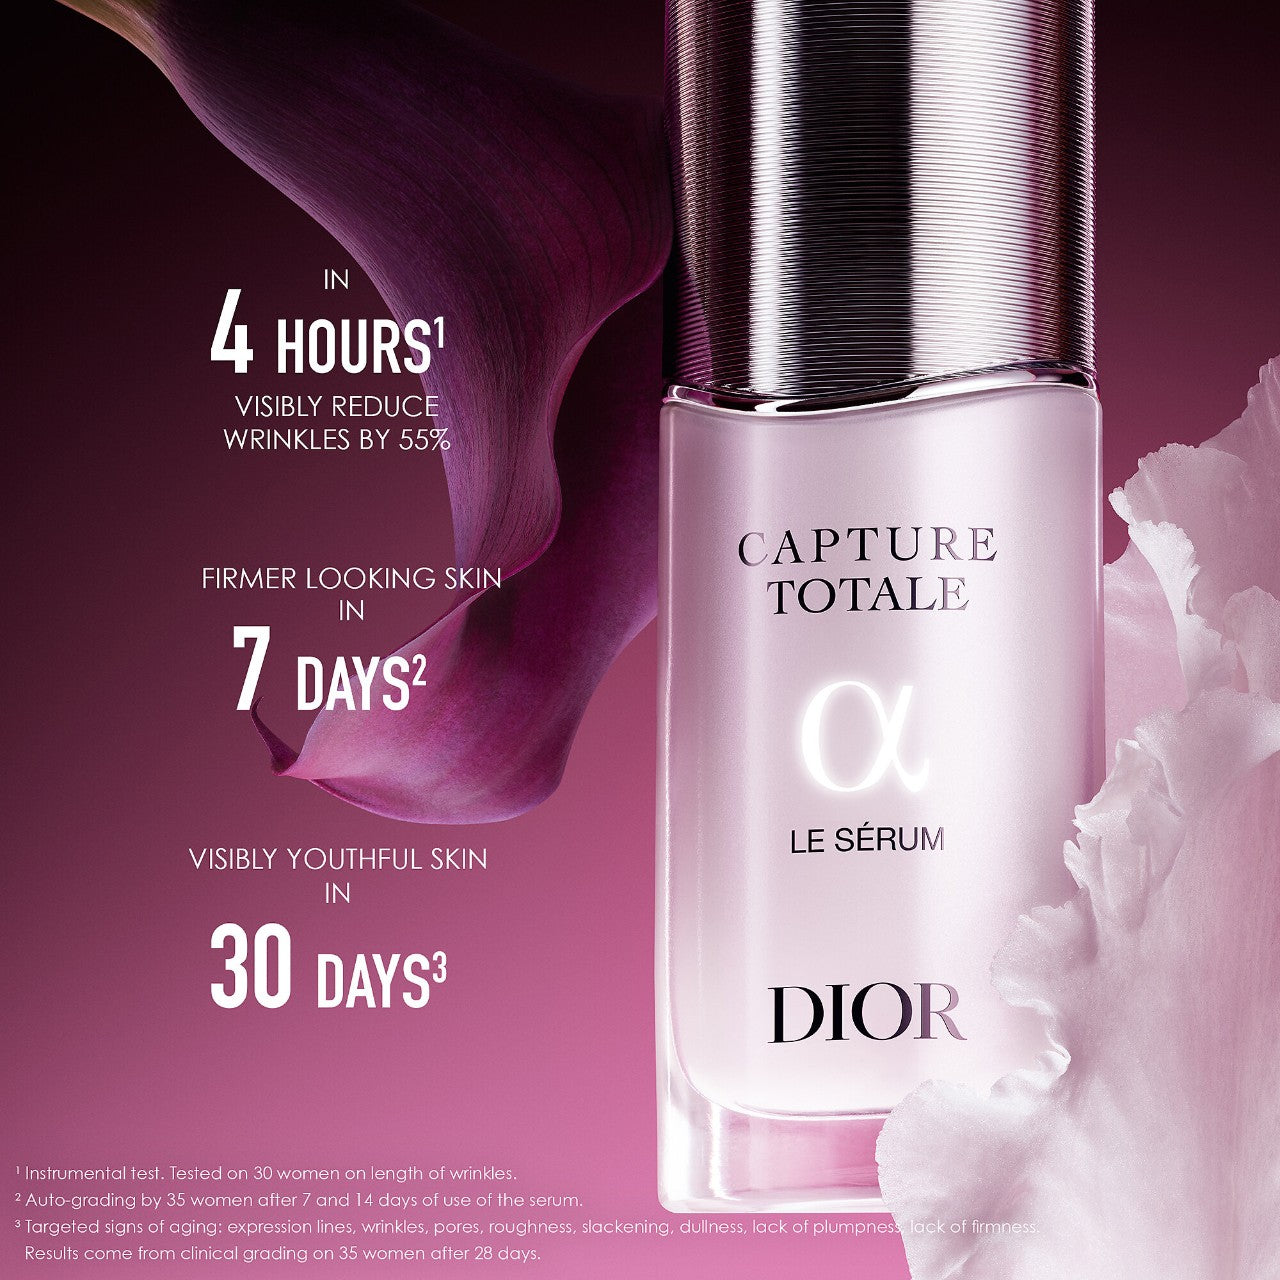 Dior Capture Totale Le Sérum Skincare Set